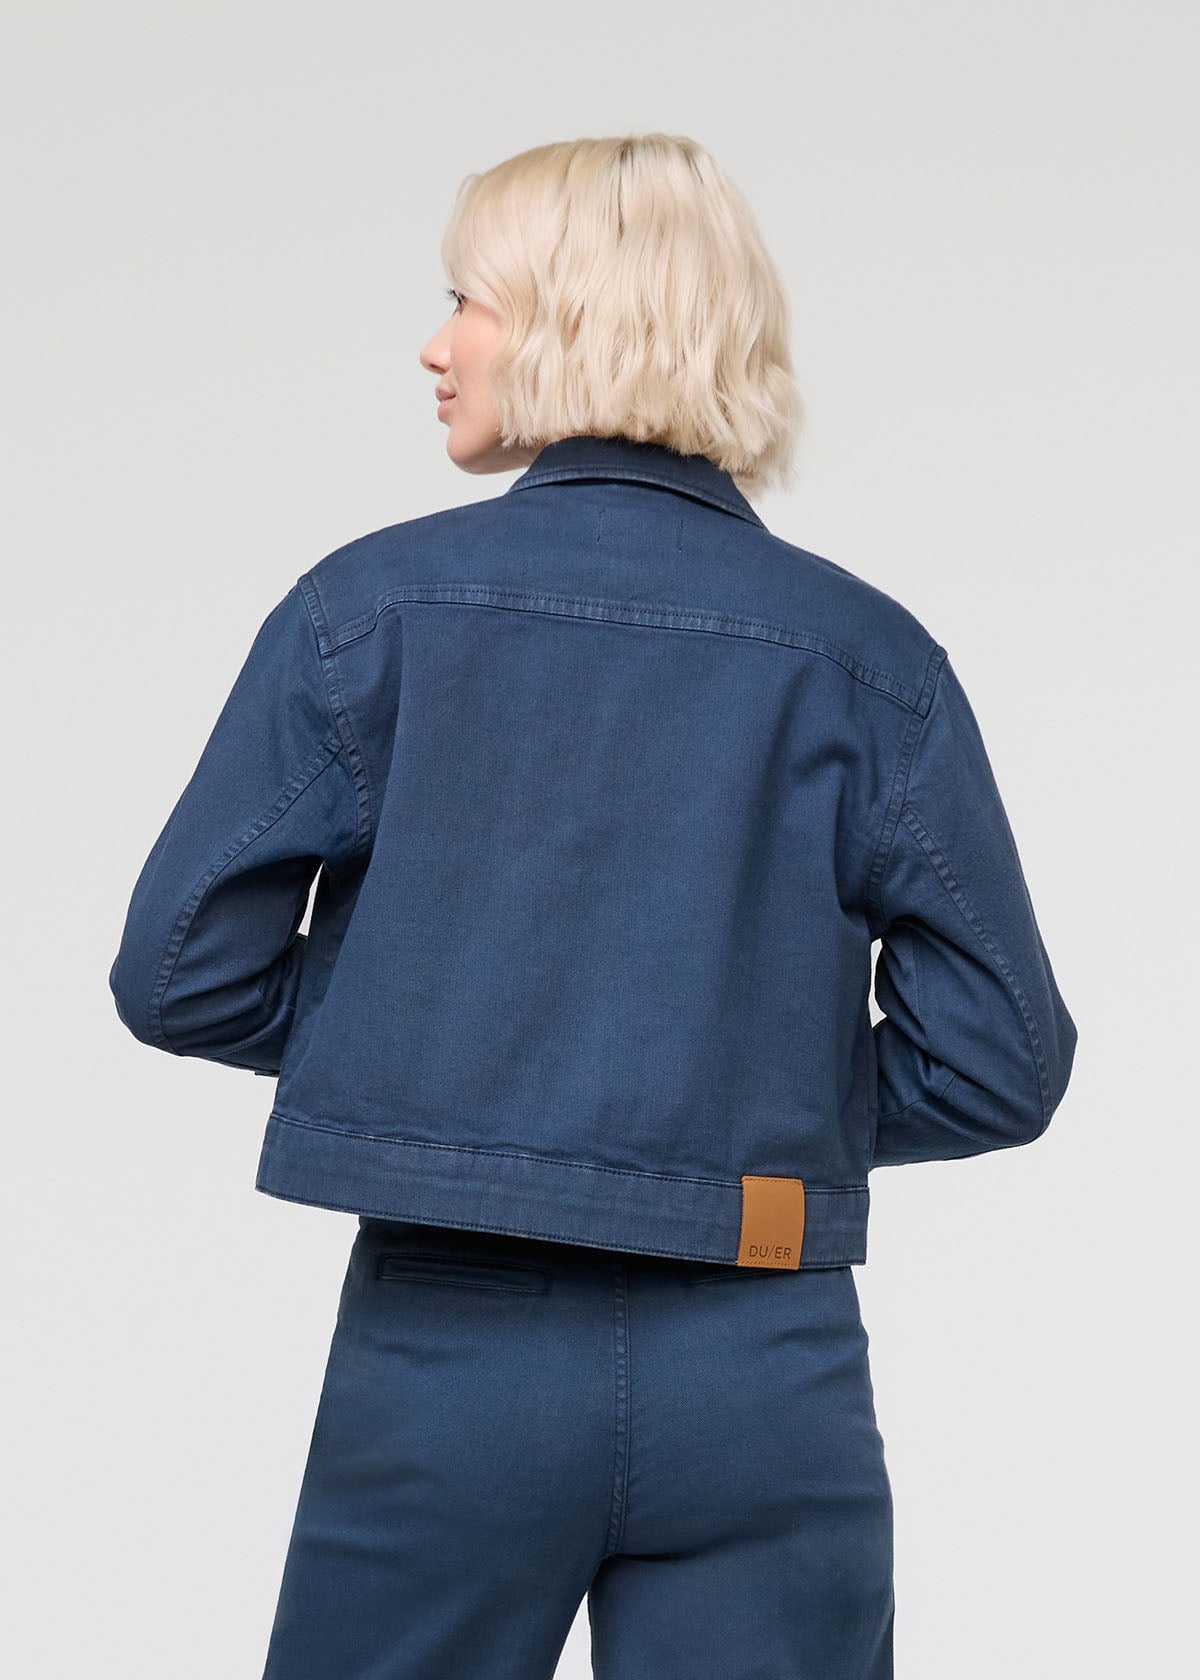 womens navy cotton trucker jacket back